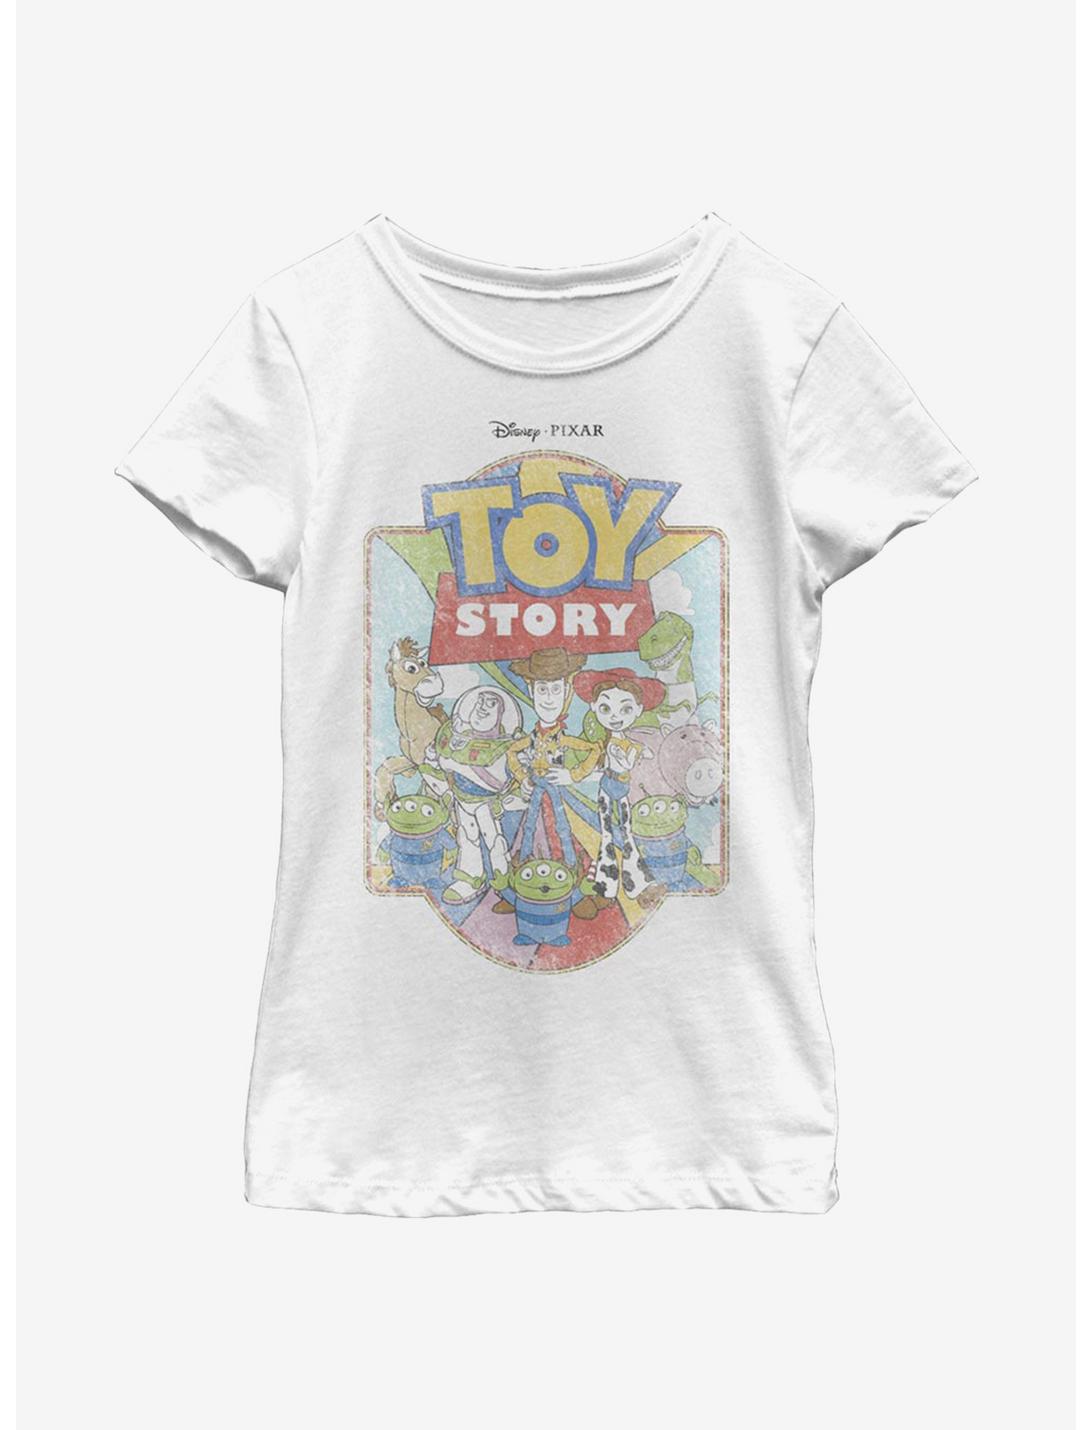 Disney Pixar Toy Story Vintage Story Youth Girls T-Shirt, WHITE, hi-res